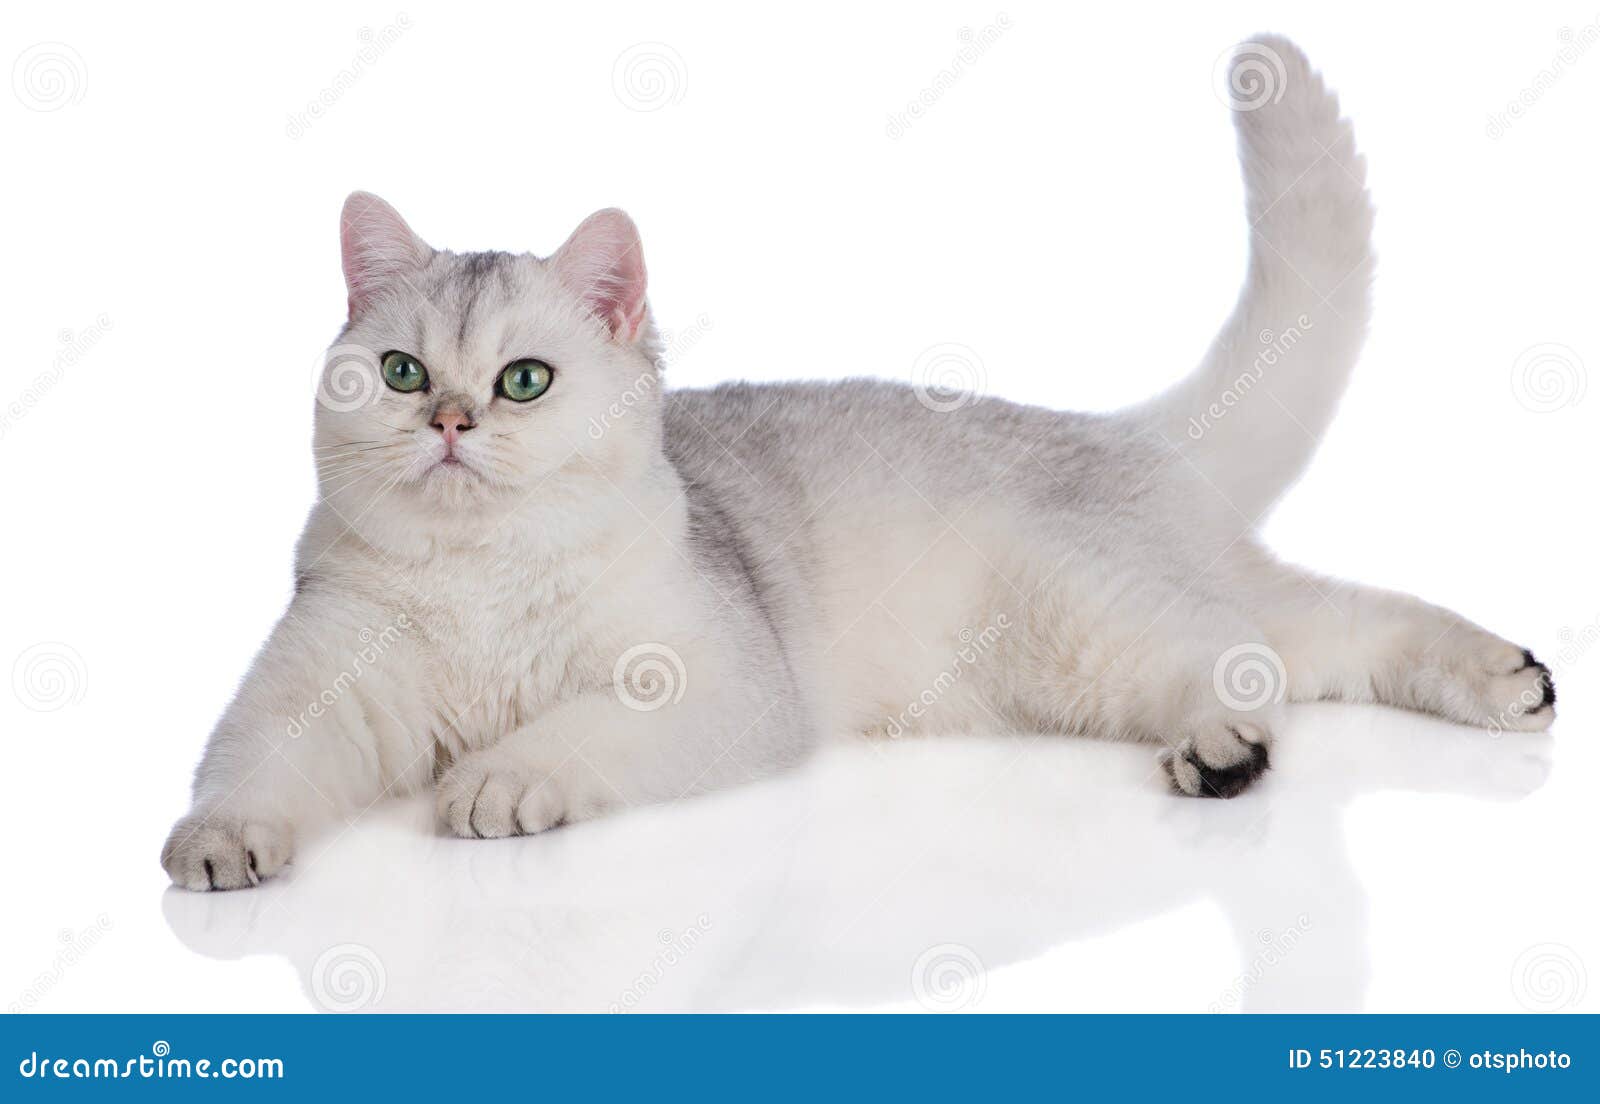 Adorable British Shorthair Kitten On White Stock Photo Image Of